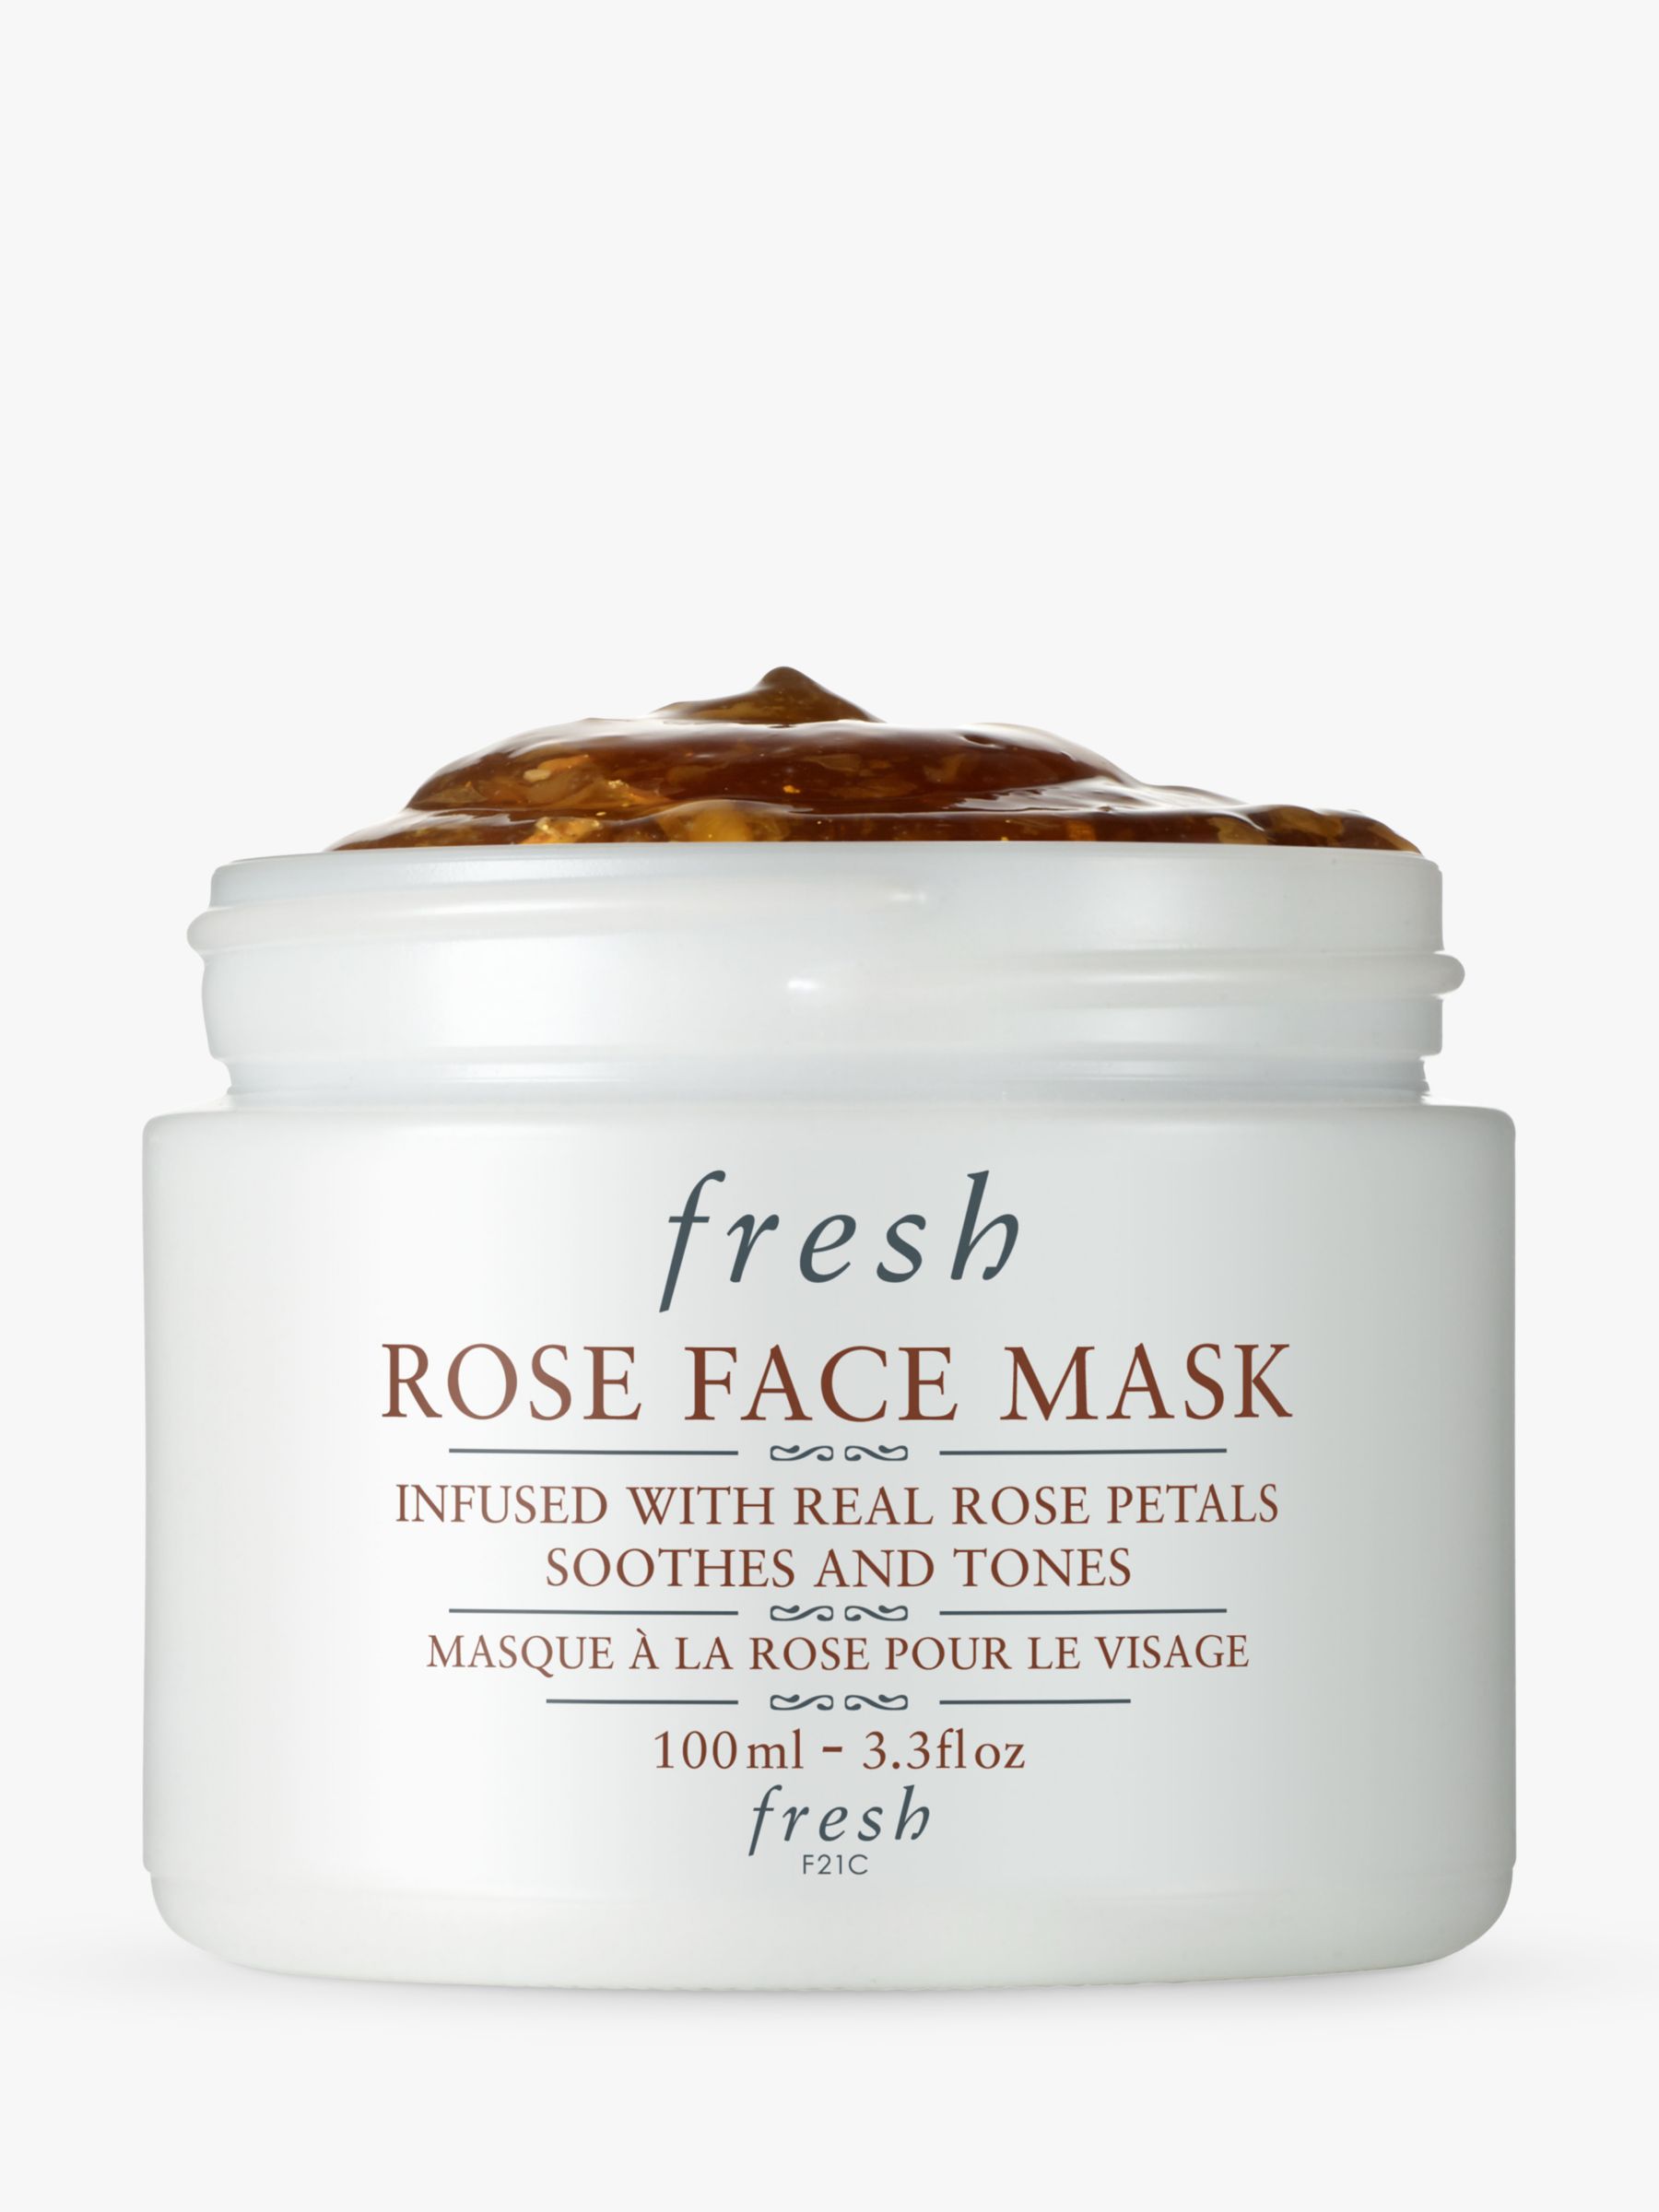 Image result for fresh rose hydrating mask"